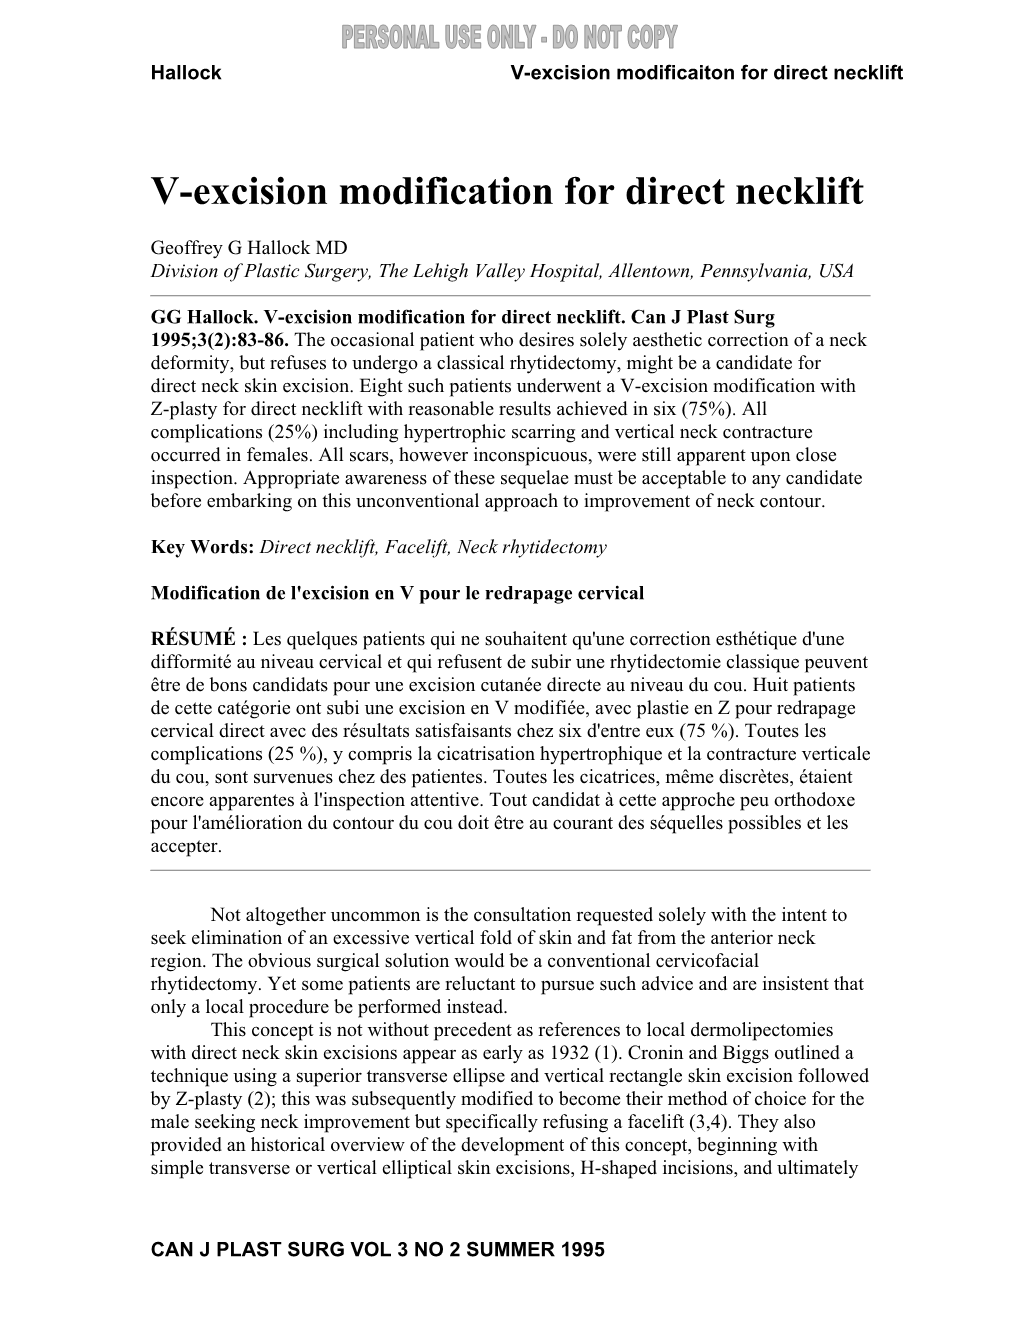 V-Excision Modification for Direct Necklift